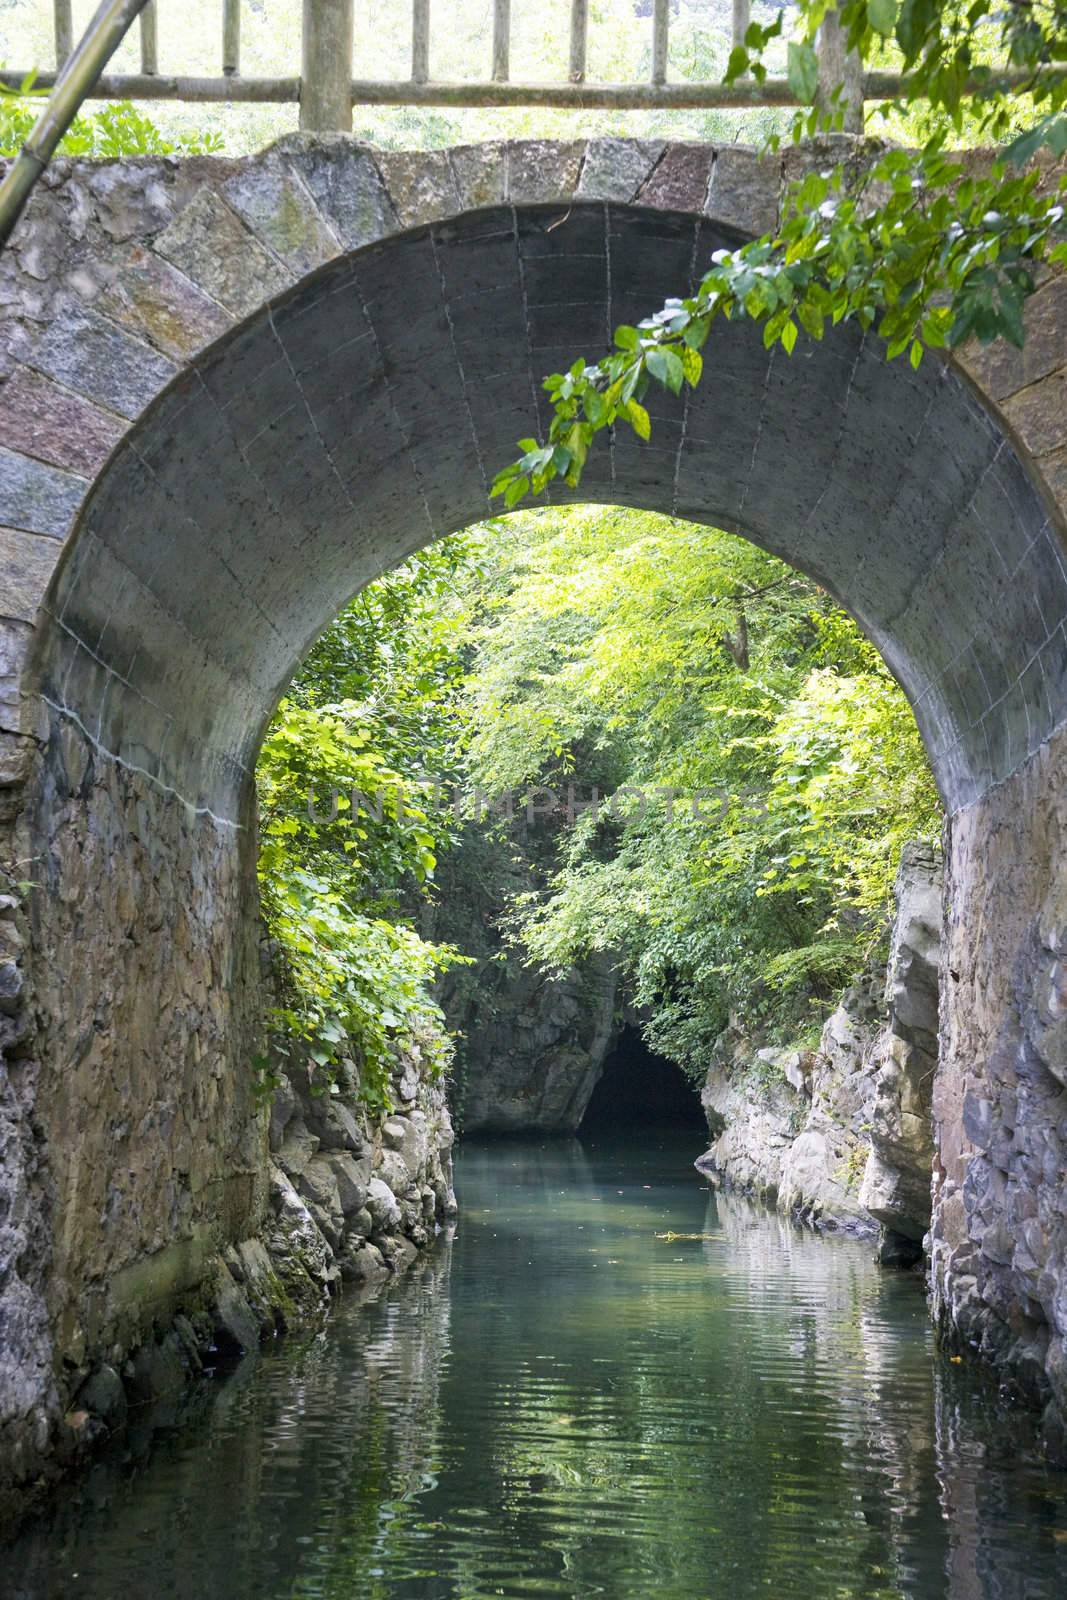 Image of an entrance to a cave through a bridge at Guilin, China.